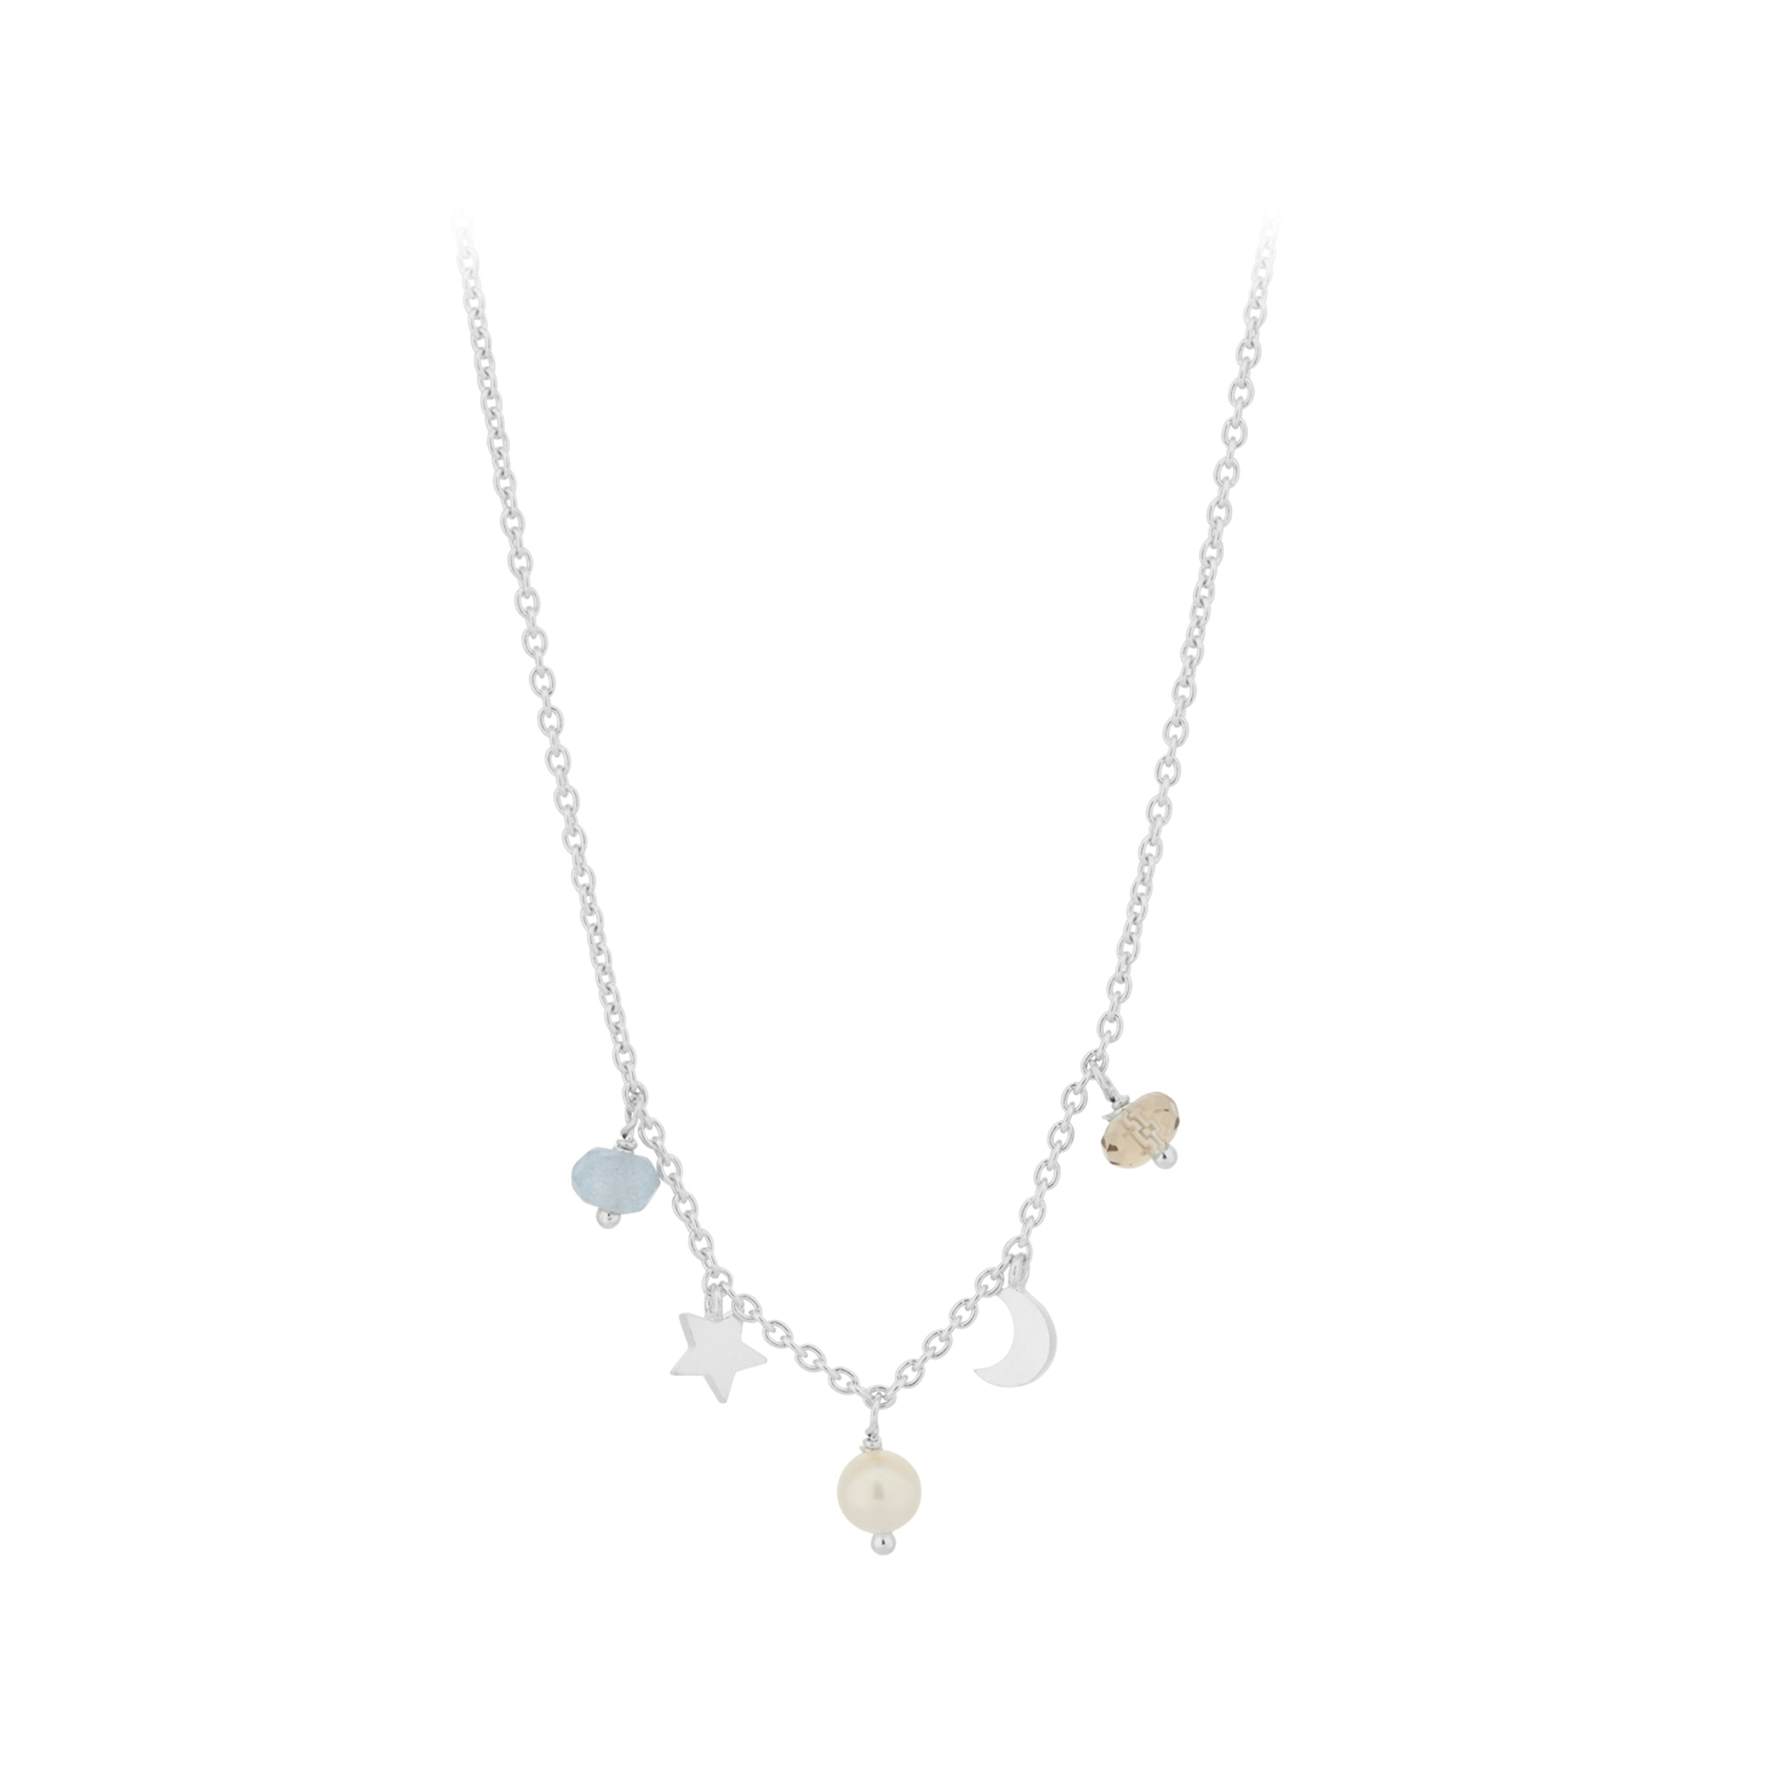 Dream Necklace von Pernille Corydon in Silber Sterling 925